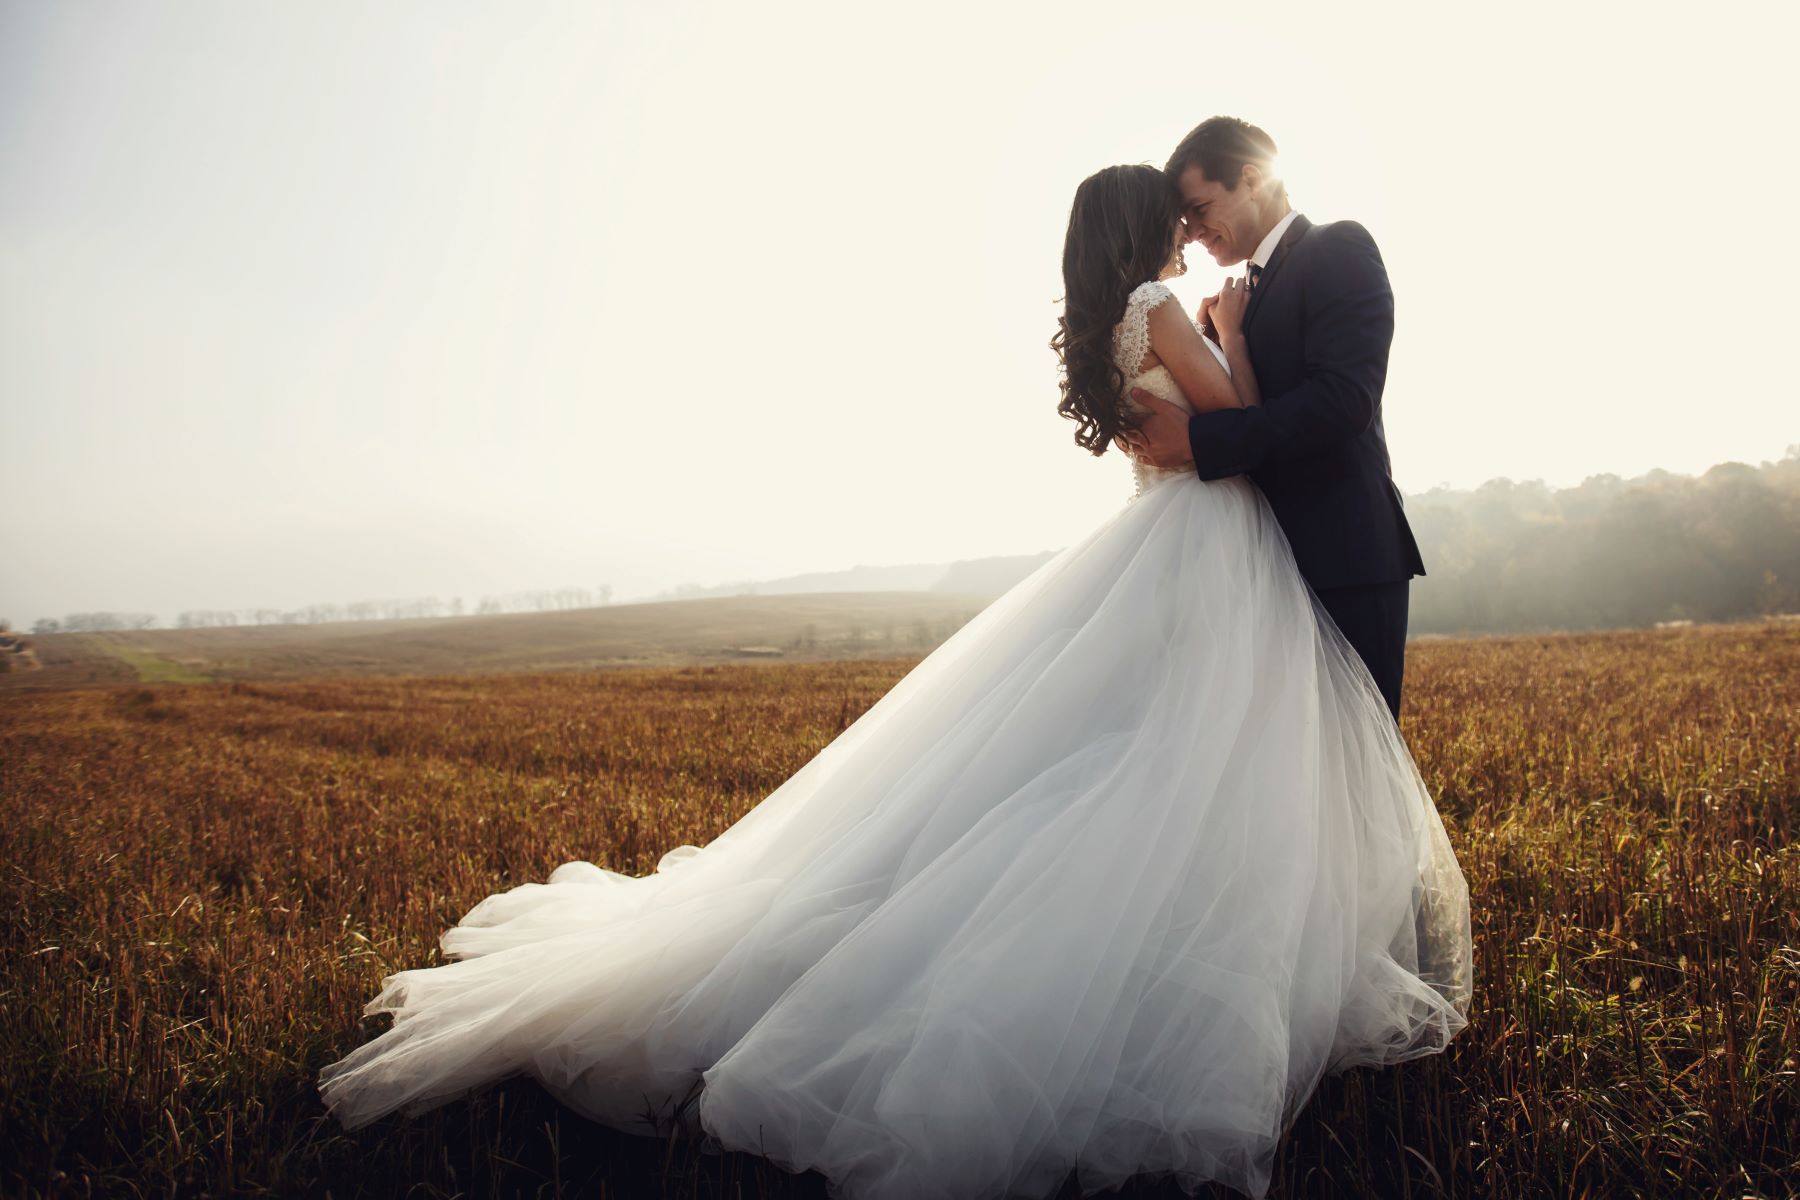 Bride and groom in field embracing